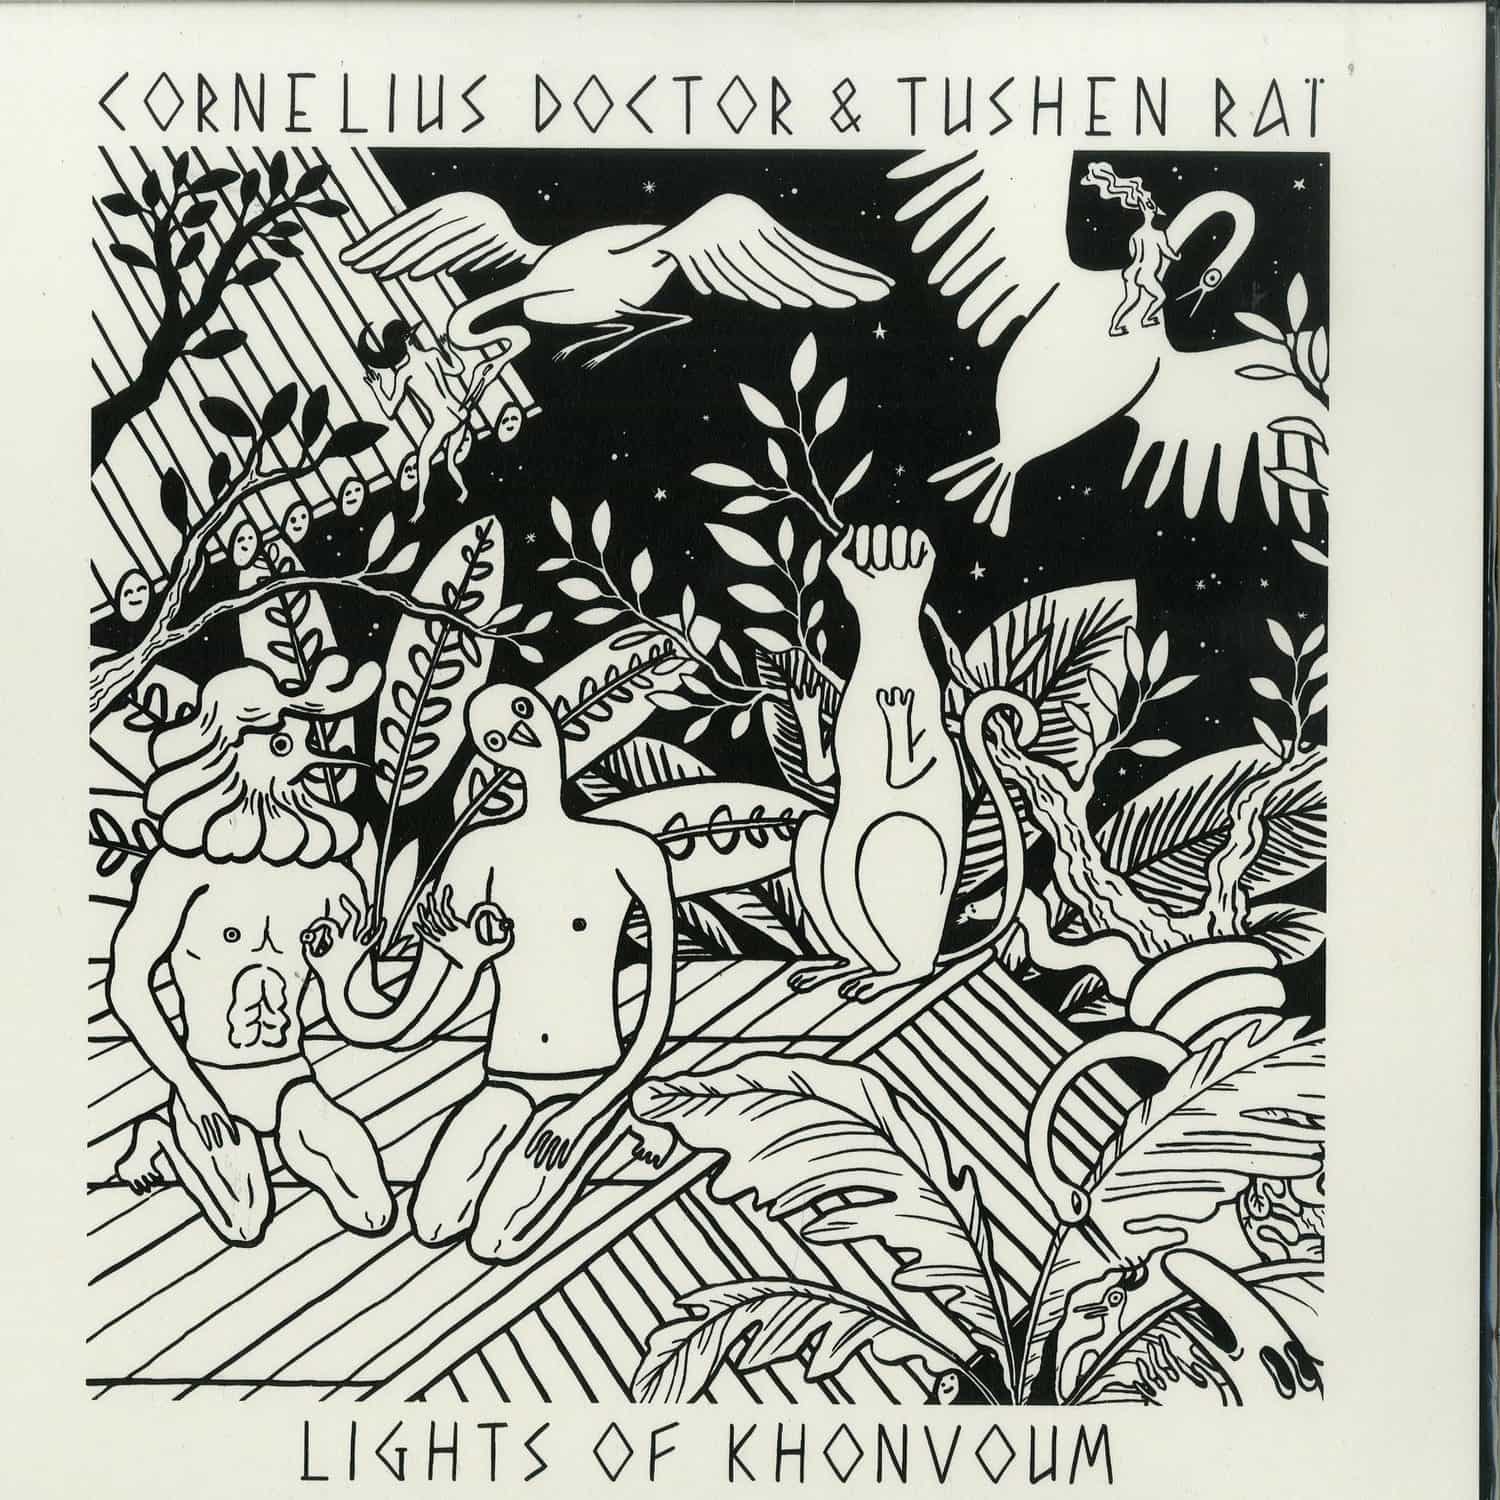 Cornelius Doctor - LIGHTS OF KHONVOUM